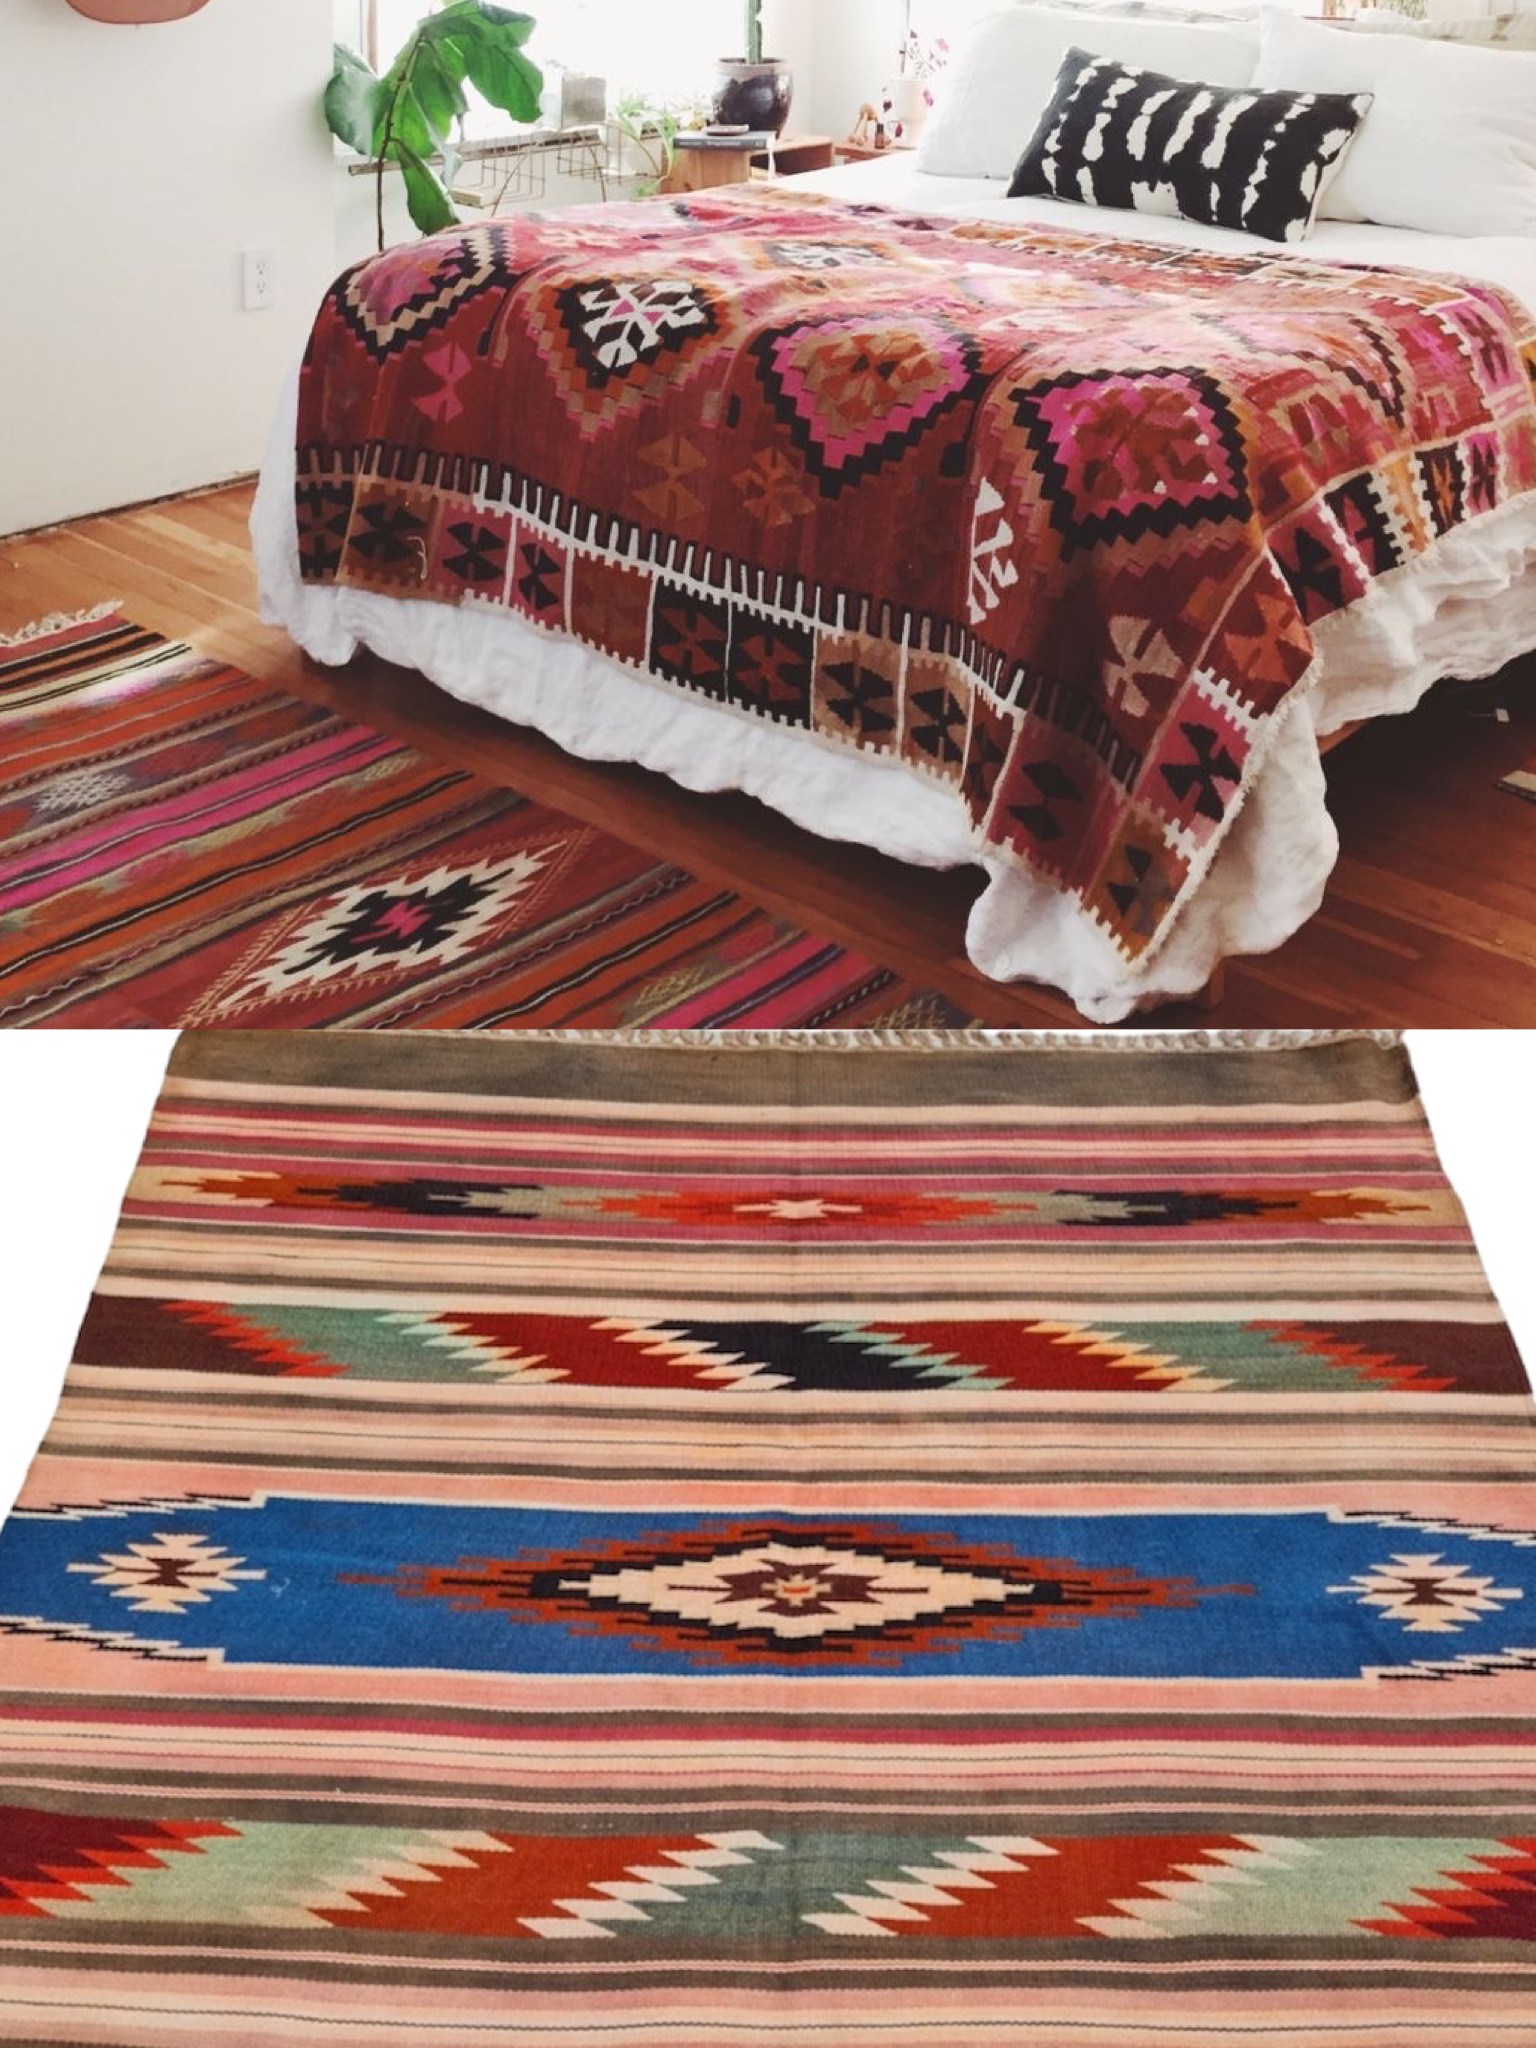 HAND- KNOTTED VINTAGE| Turkish Kilim| Wool |Navaho Inspired|8’ x 4’| - Honorooroo Lifestyle